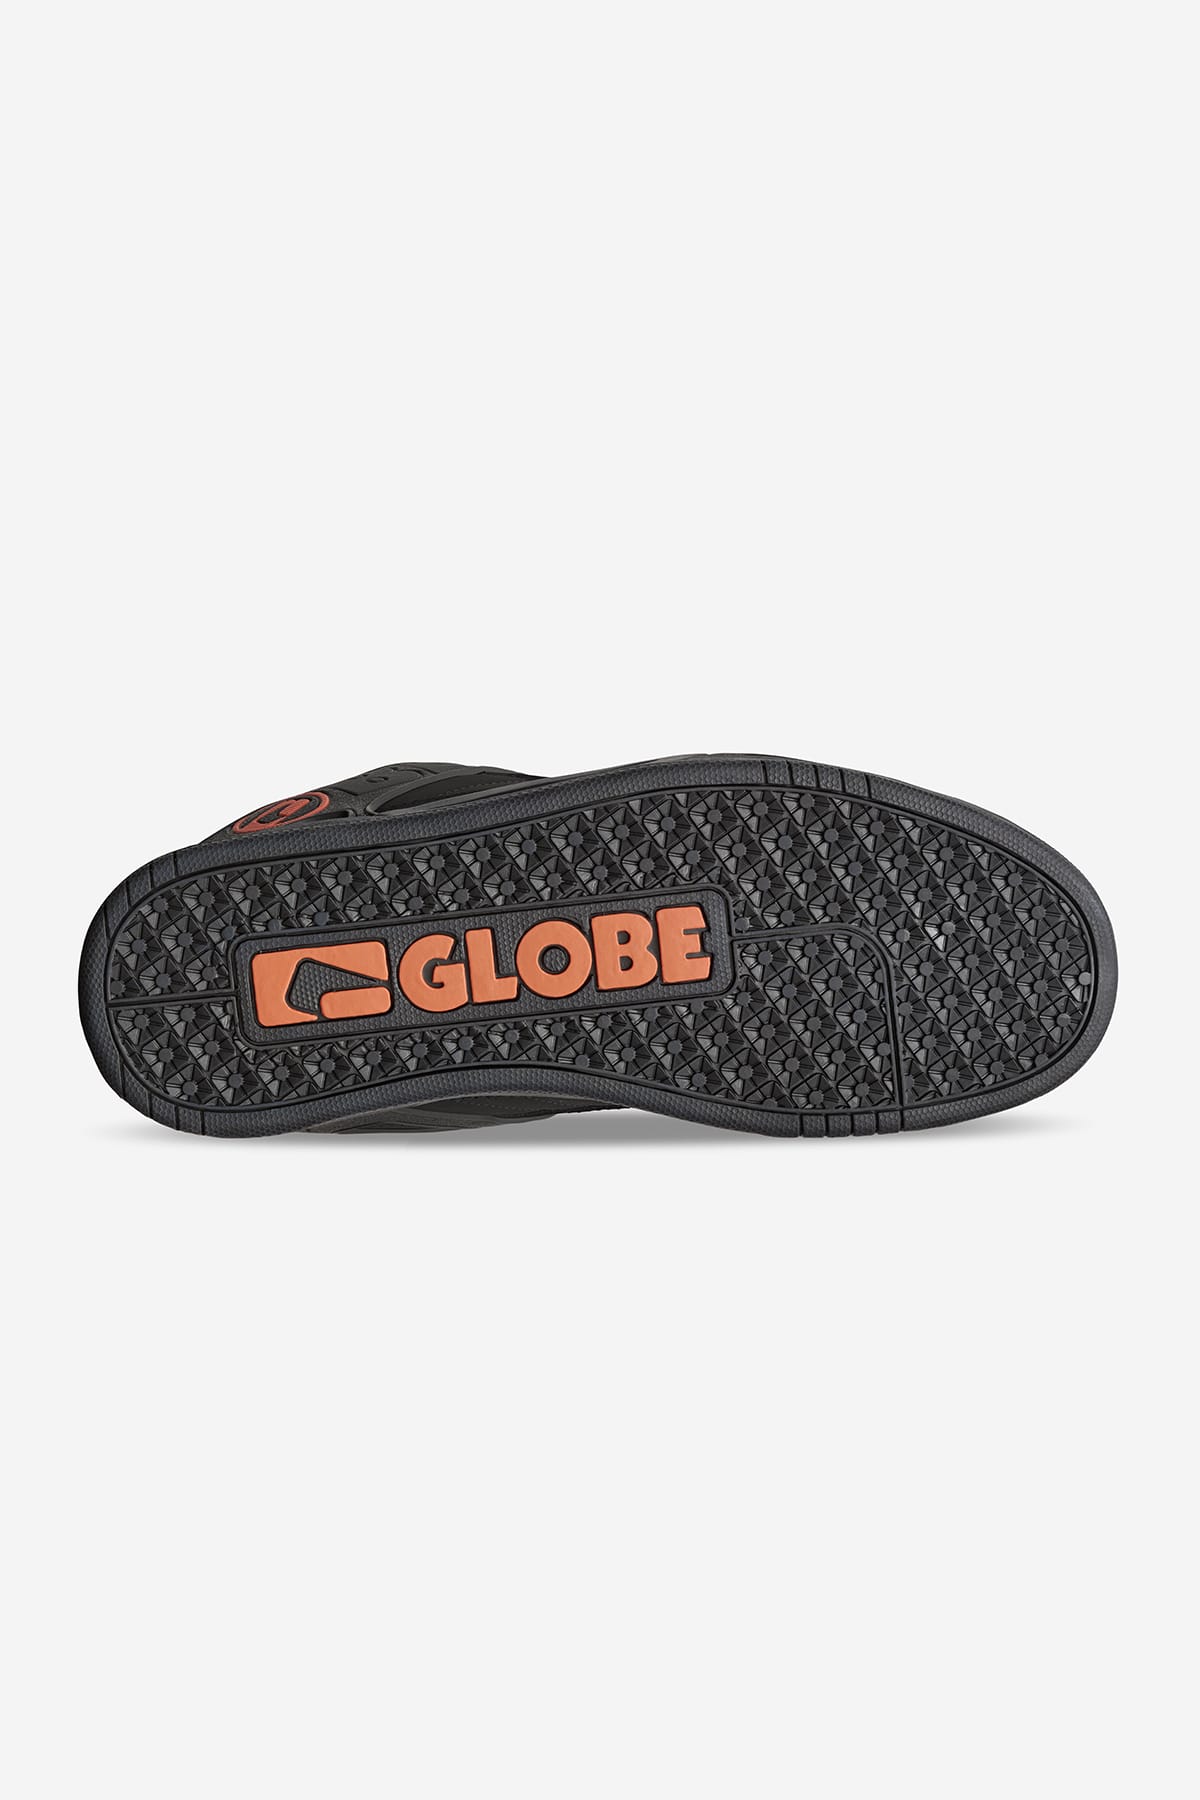 Globe - Tilt - Black/Black/Bronce - skateboard Zapatos